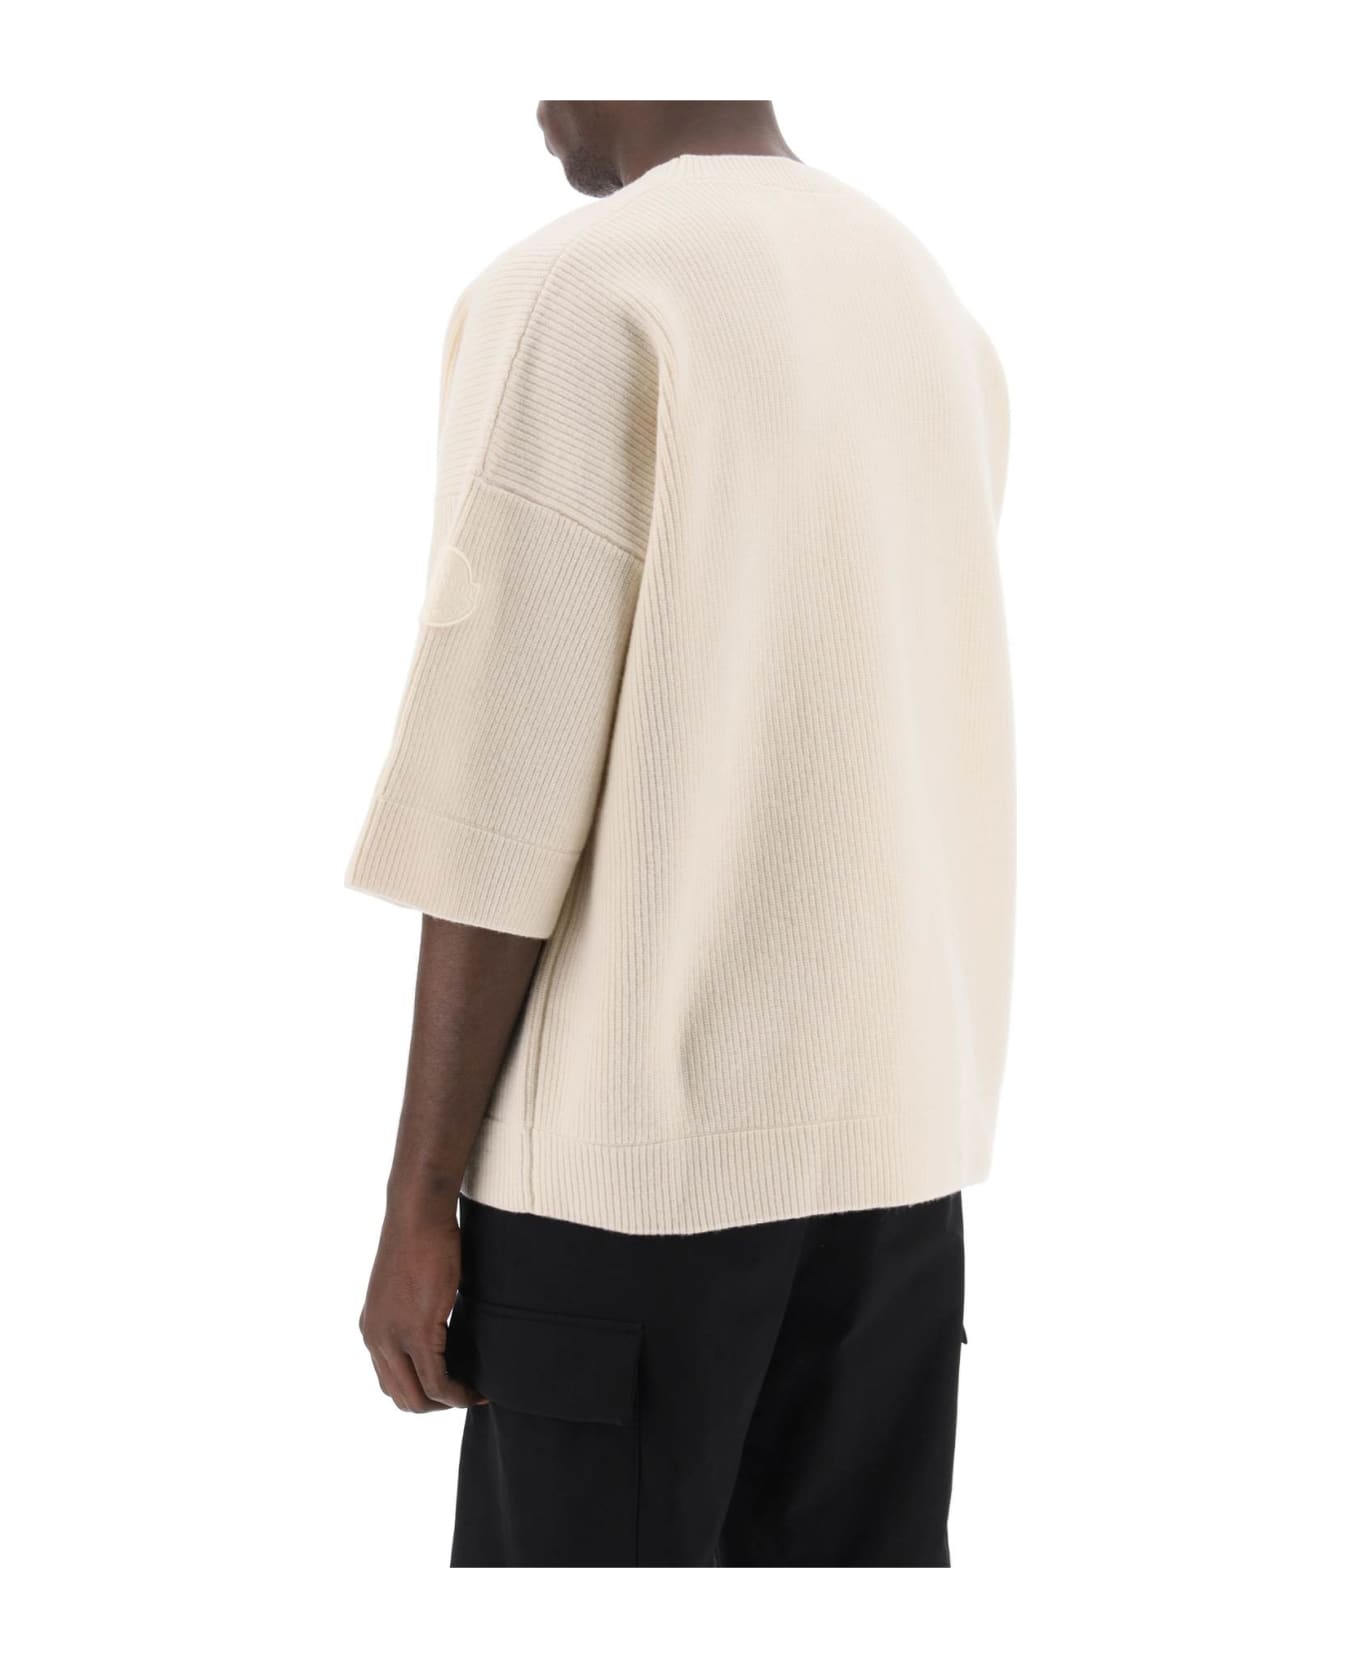 Moncler Genius Short-sleeved Wool Sweater - White